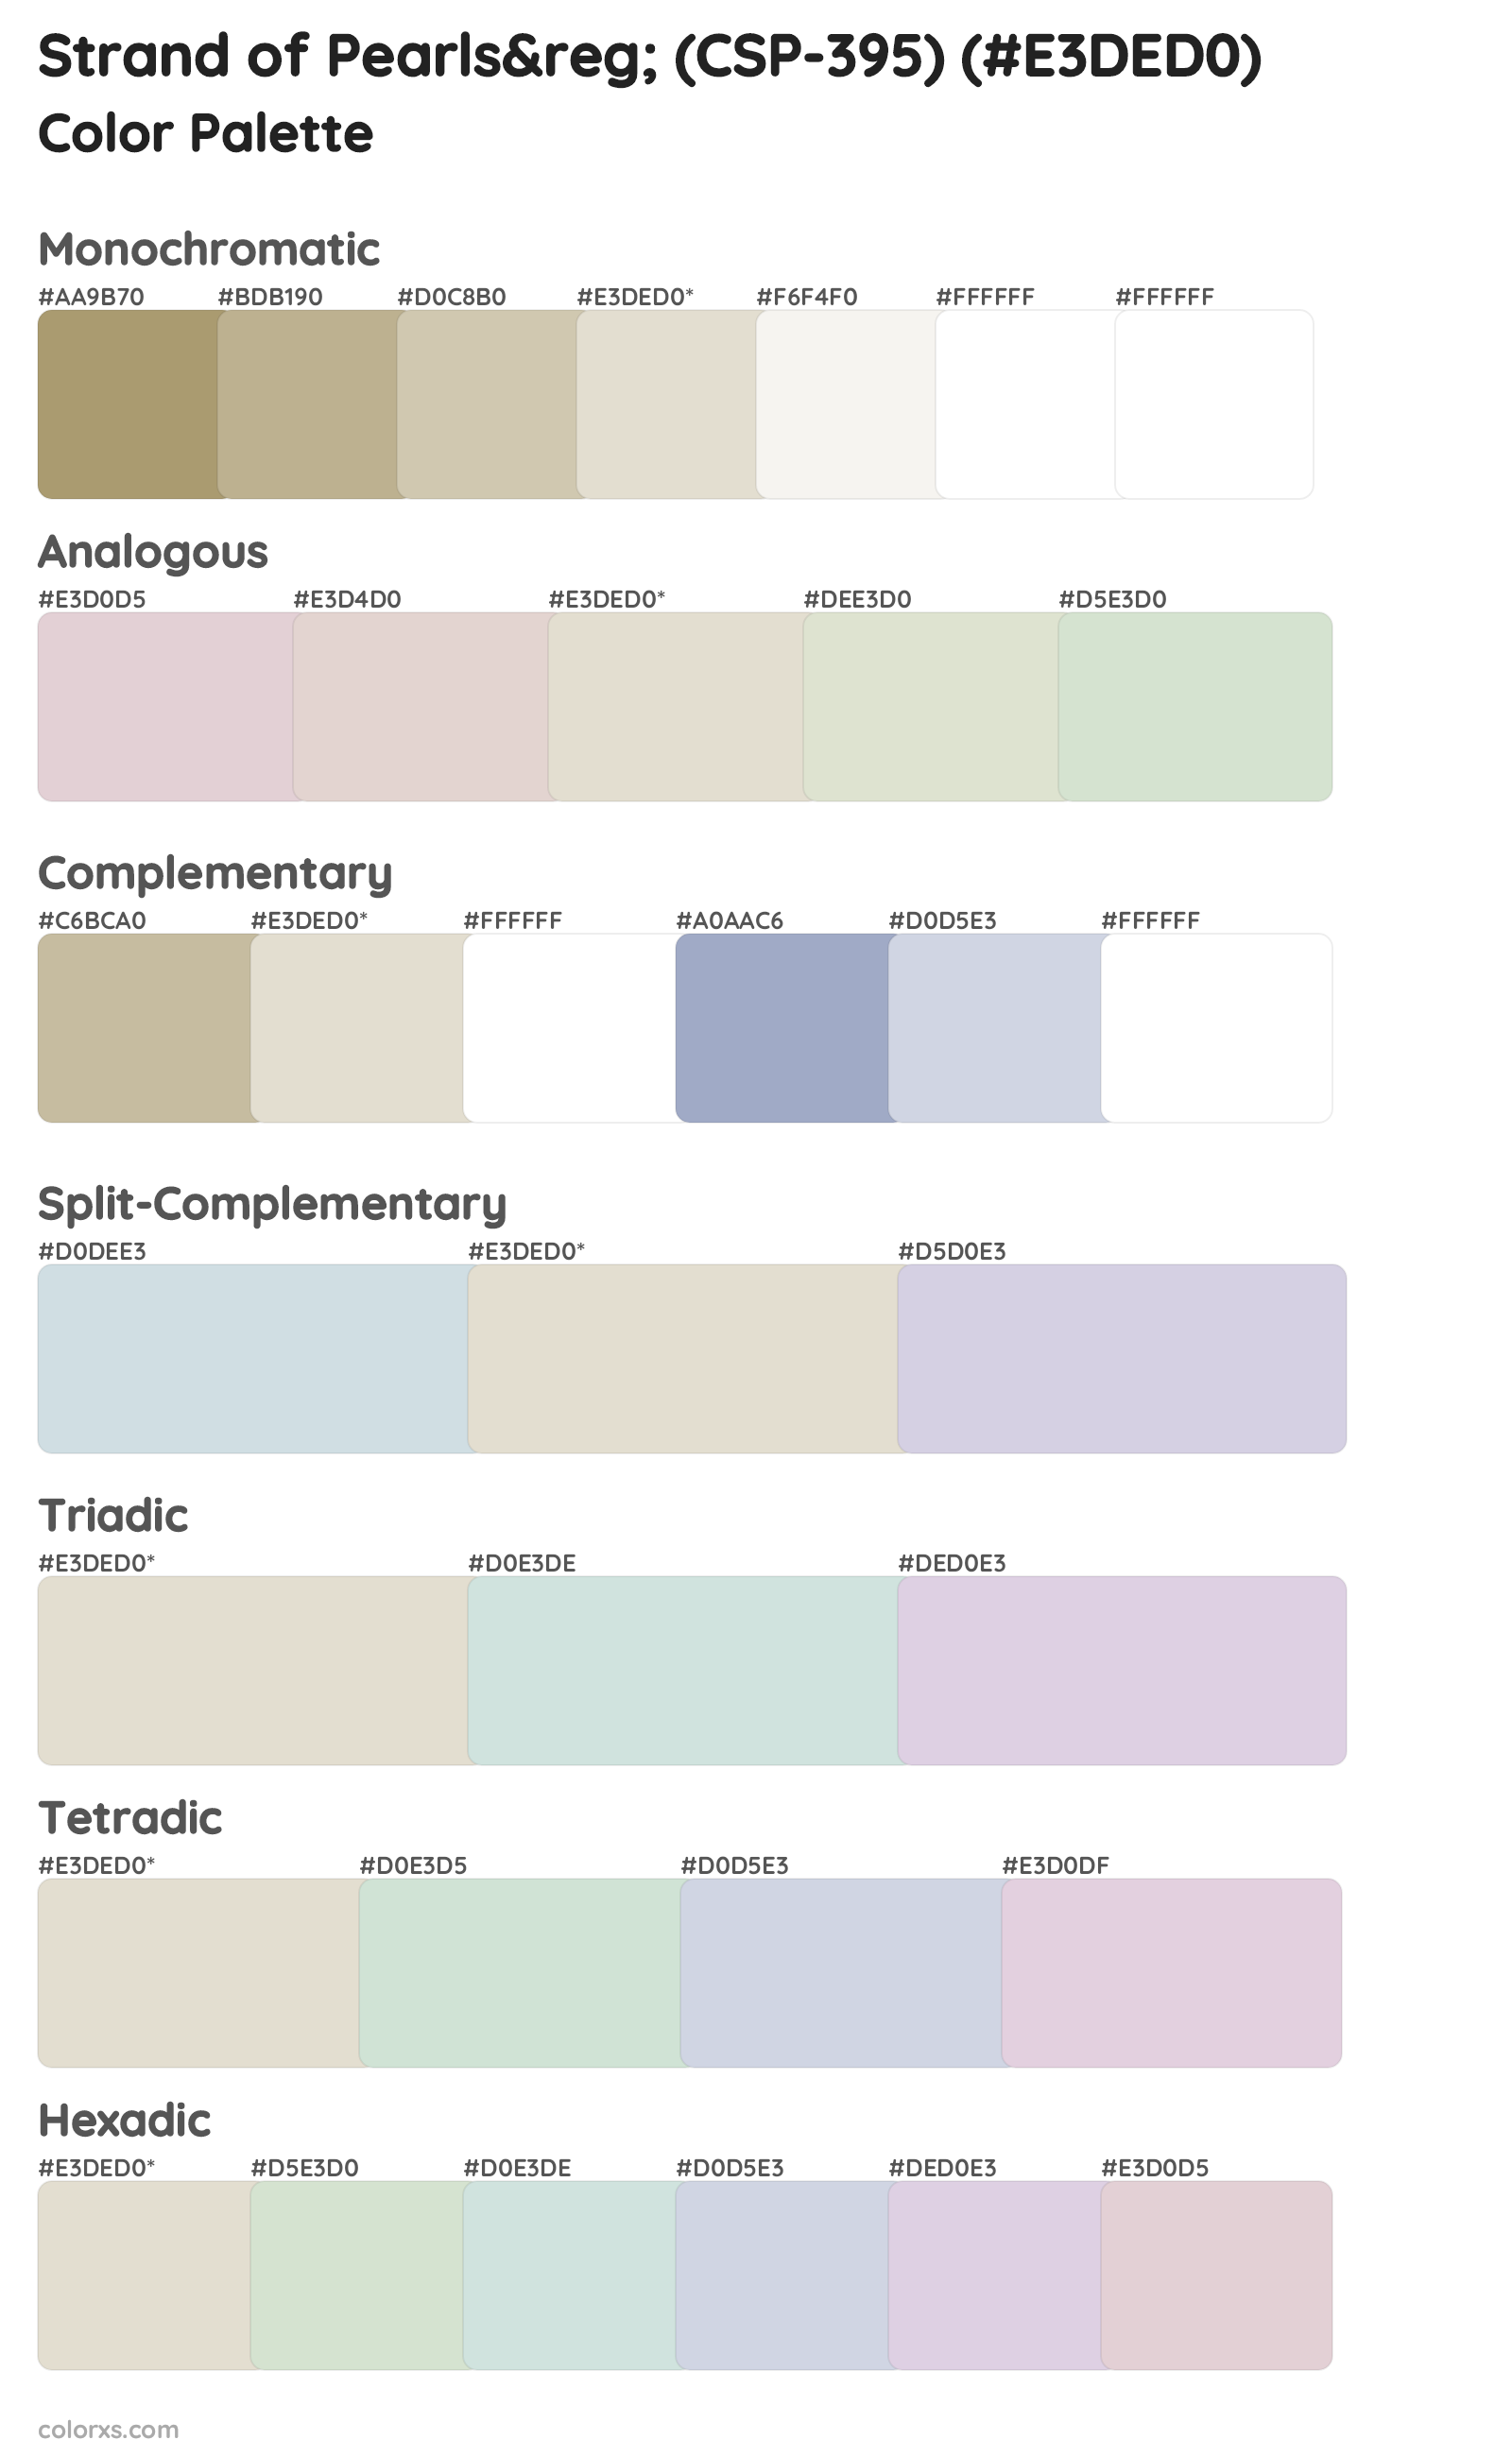 Strand of Pearls&reg; (CSP-395) Color Scheme Palettes